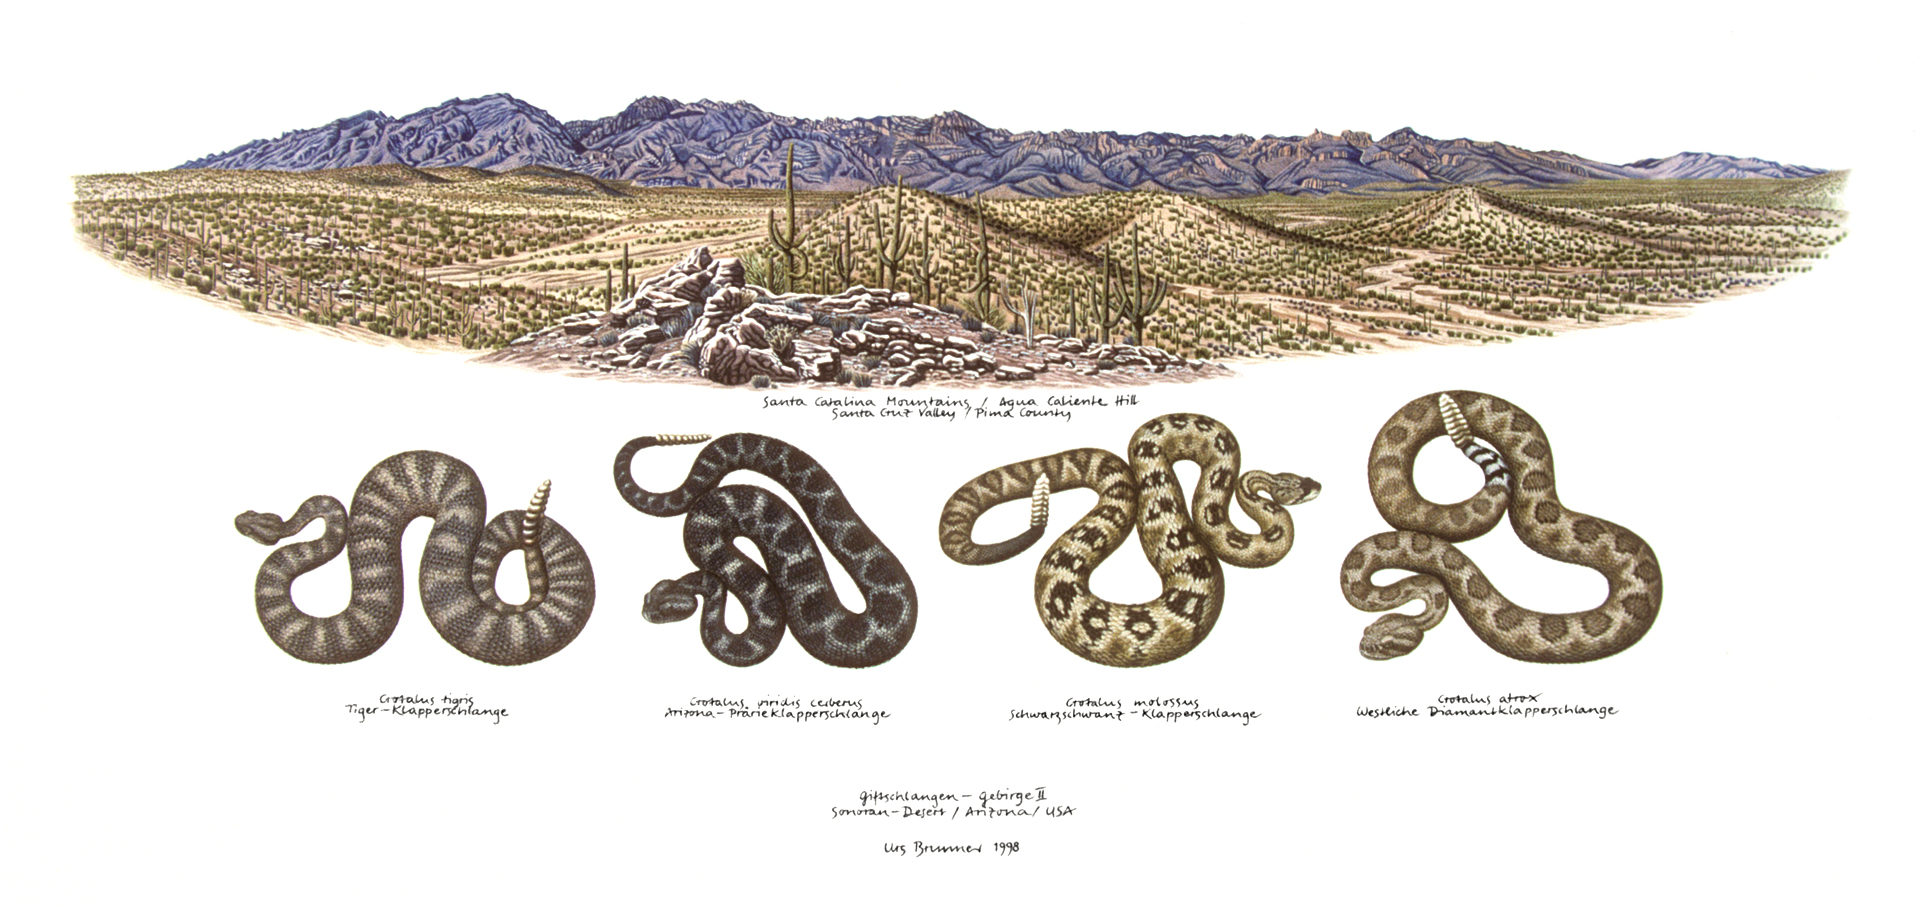 Giftschlangen-Gebirge II / Catalina Mountains (USA) / Klapperschlangen, 1998, Aquarell auf Papier, 35 x 59,5 cm